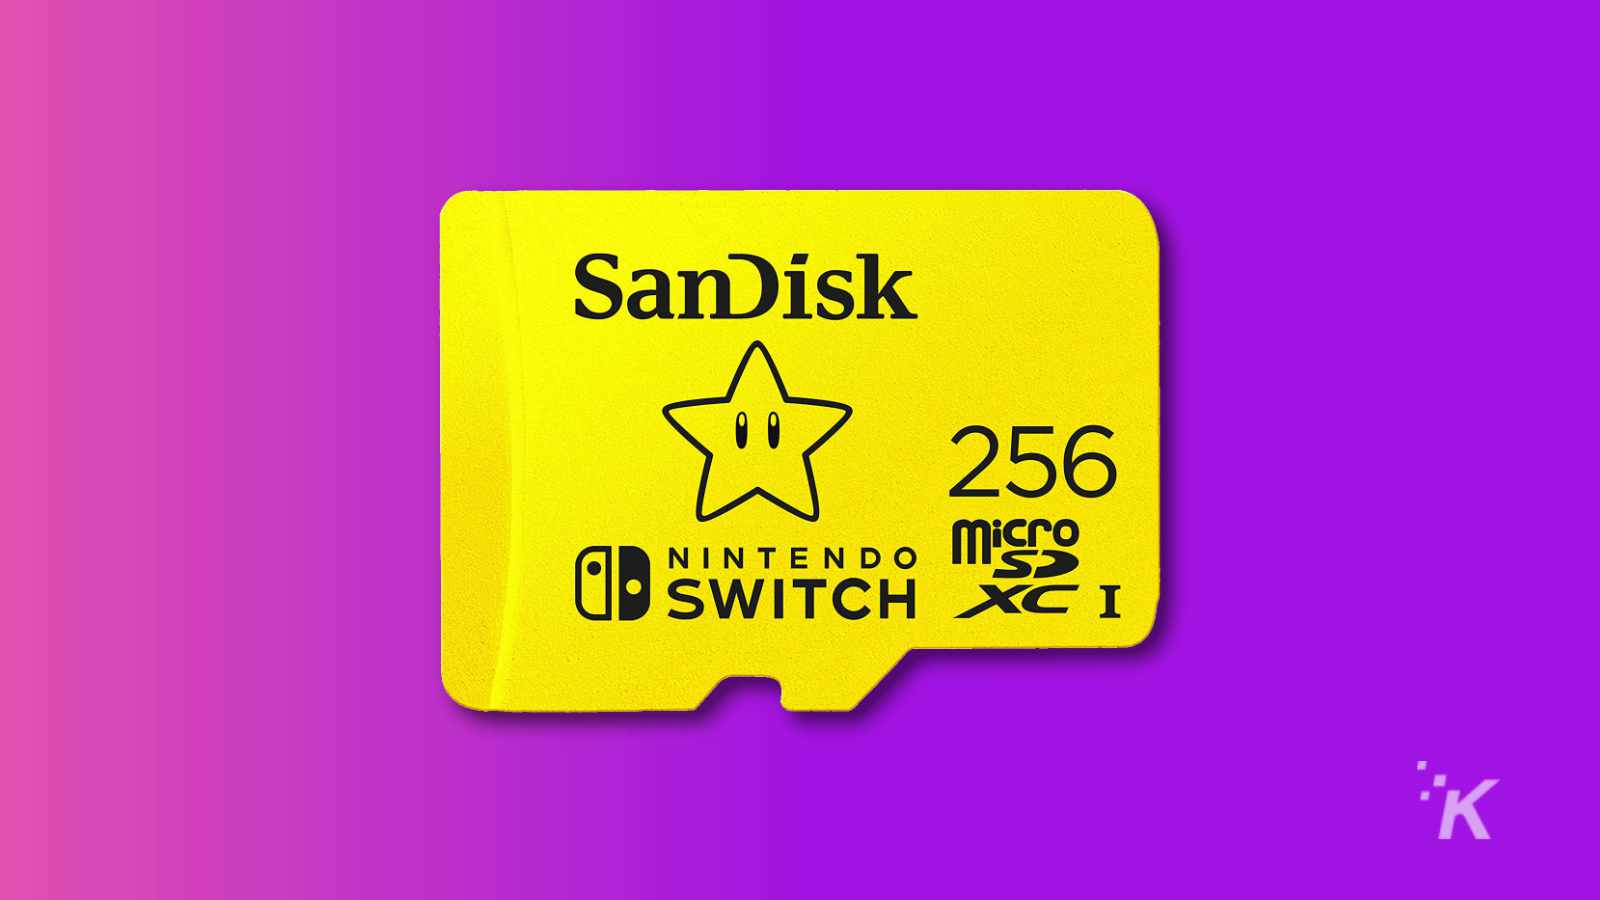 sandisk switch sdcard